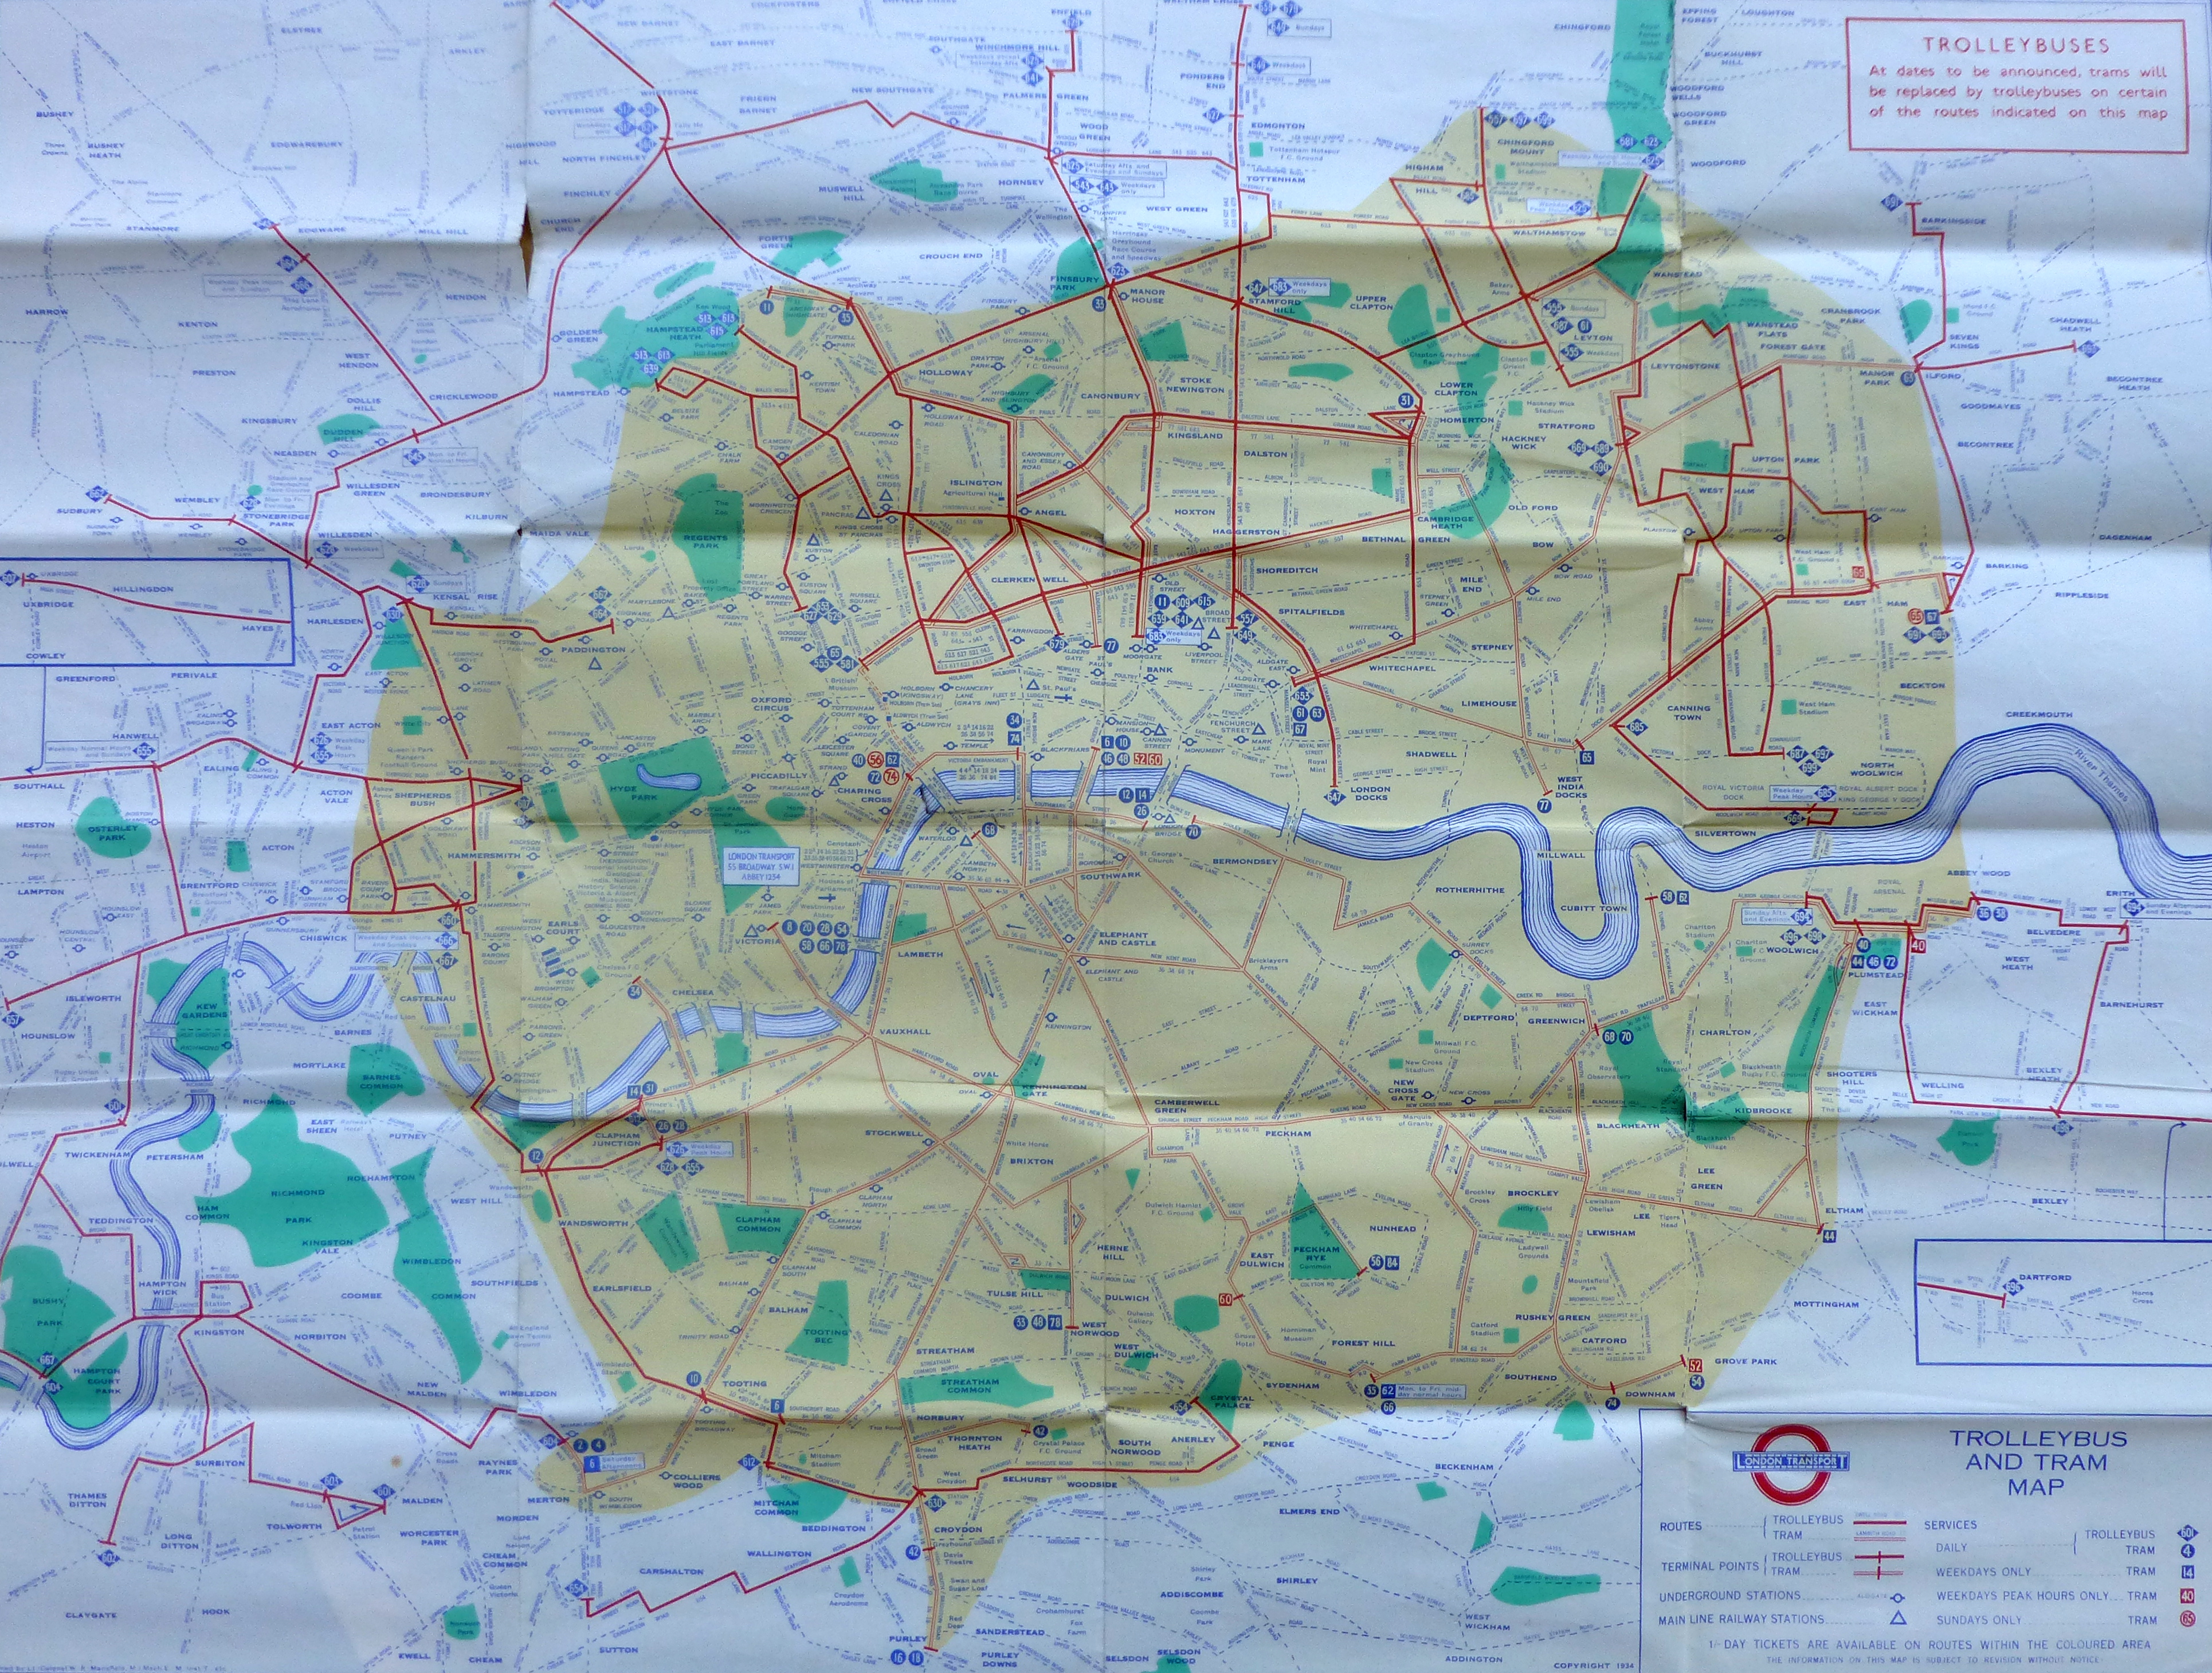 London Maps - A London Inheritance